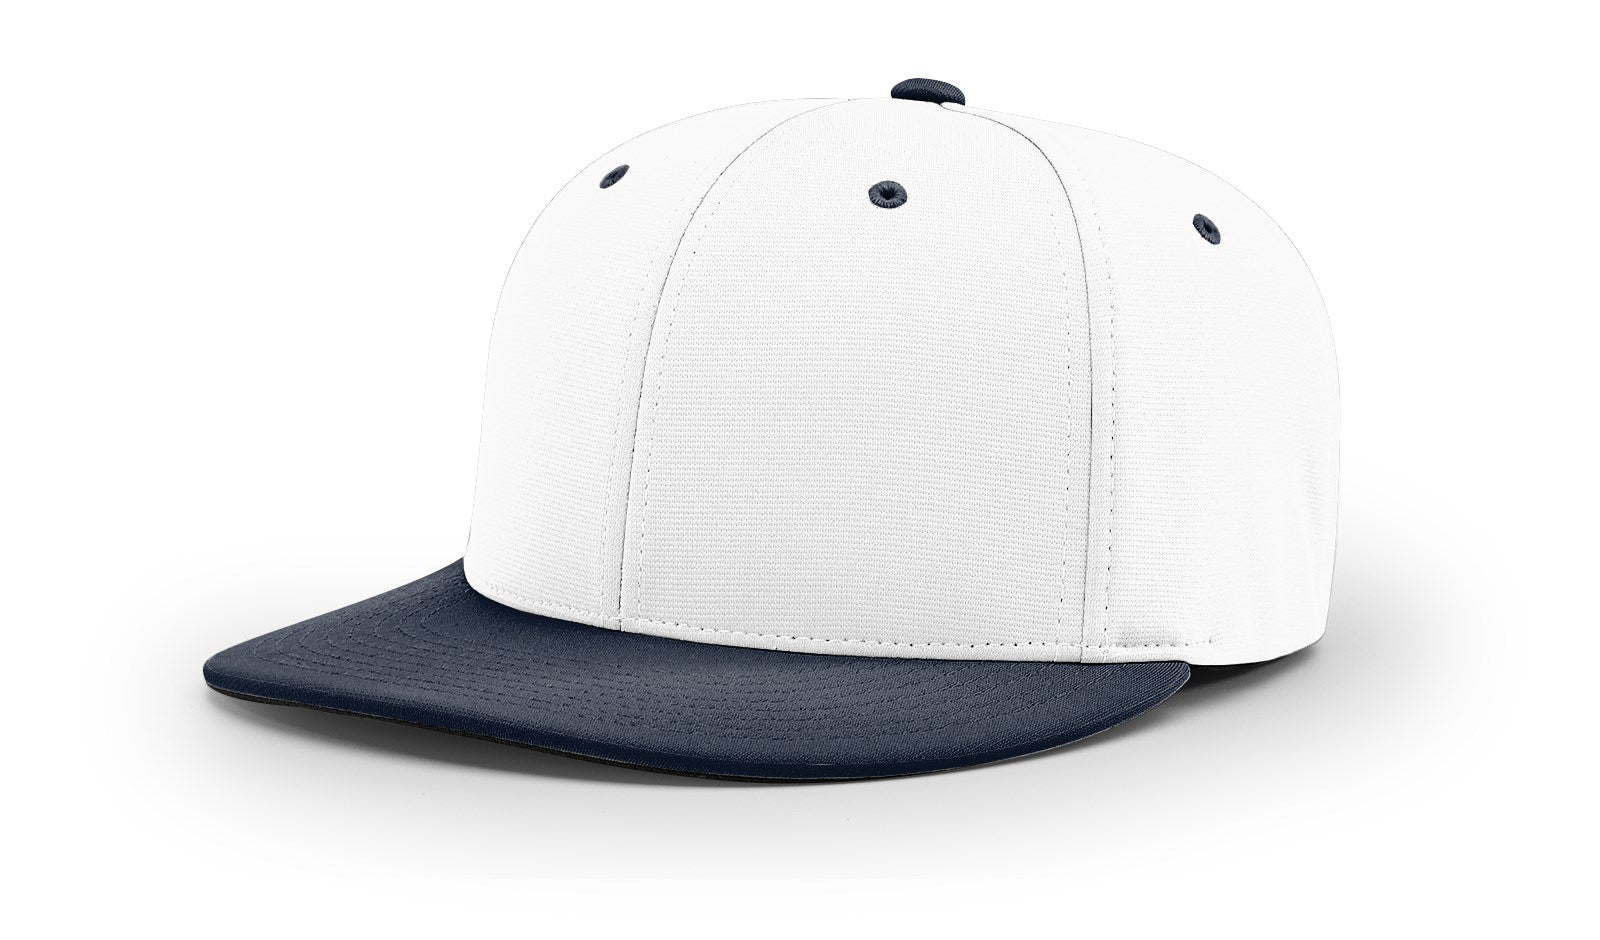 Richardson PTS20 YOUTH Flex Fit Baseball Hats - AtlanticCoastSports